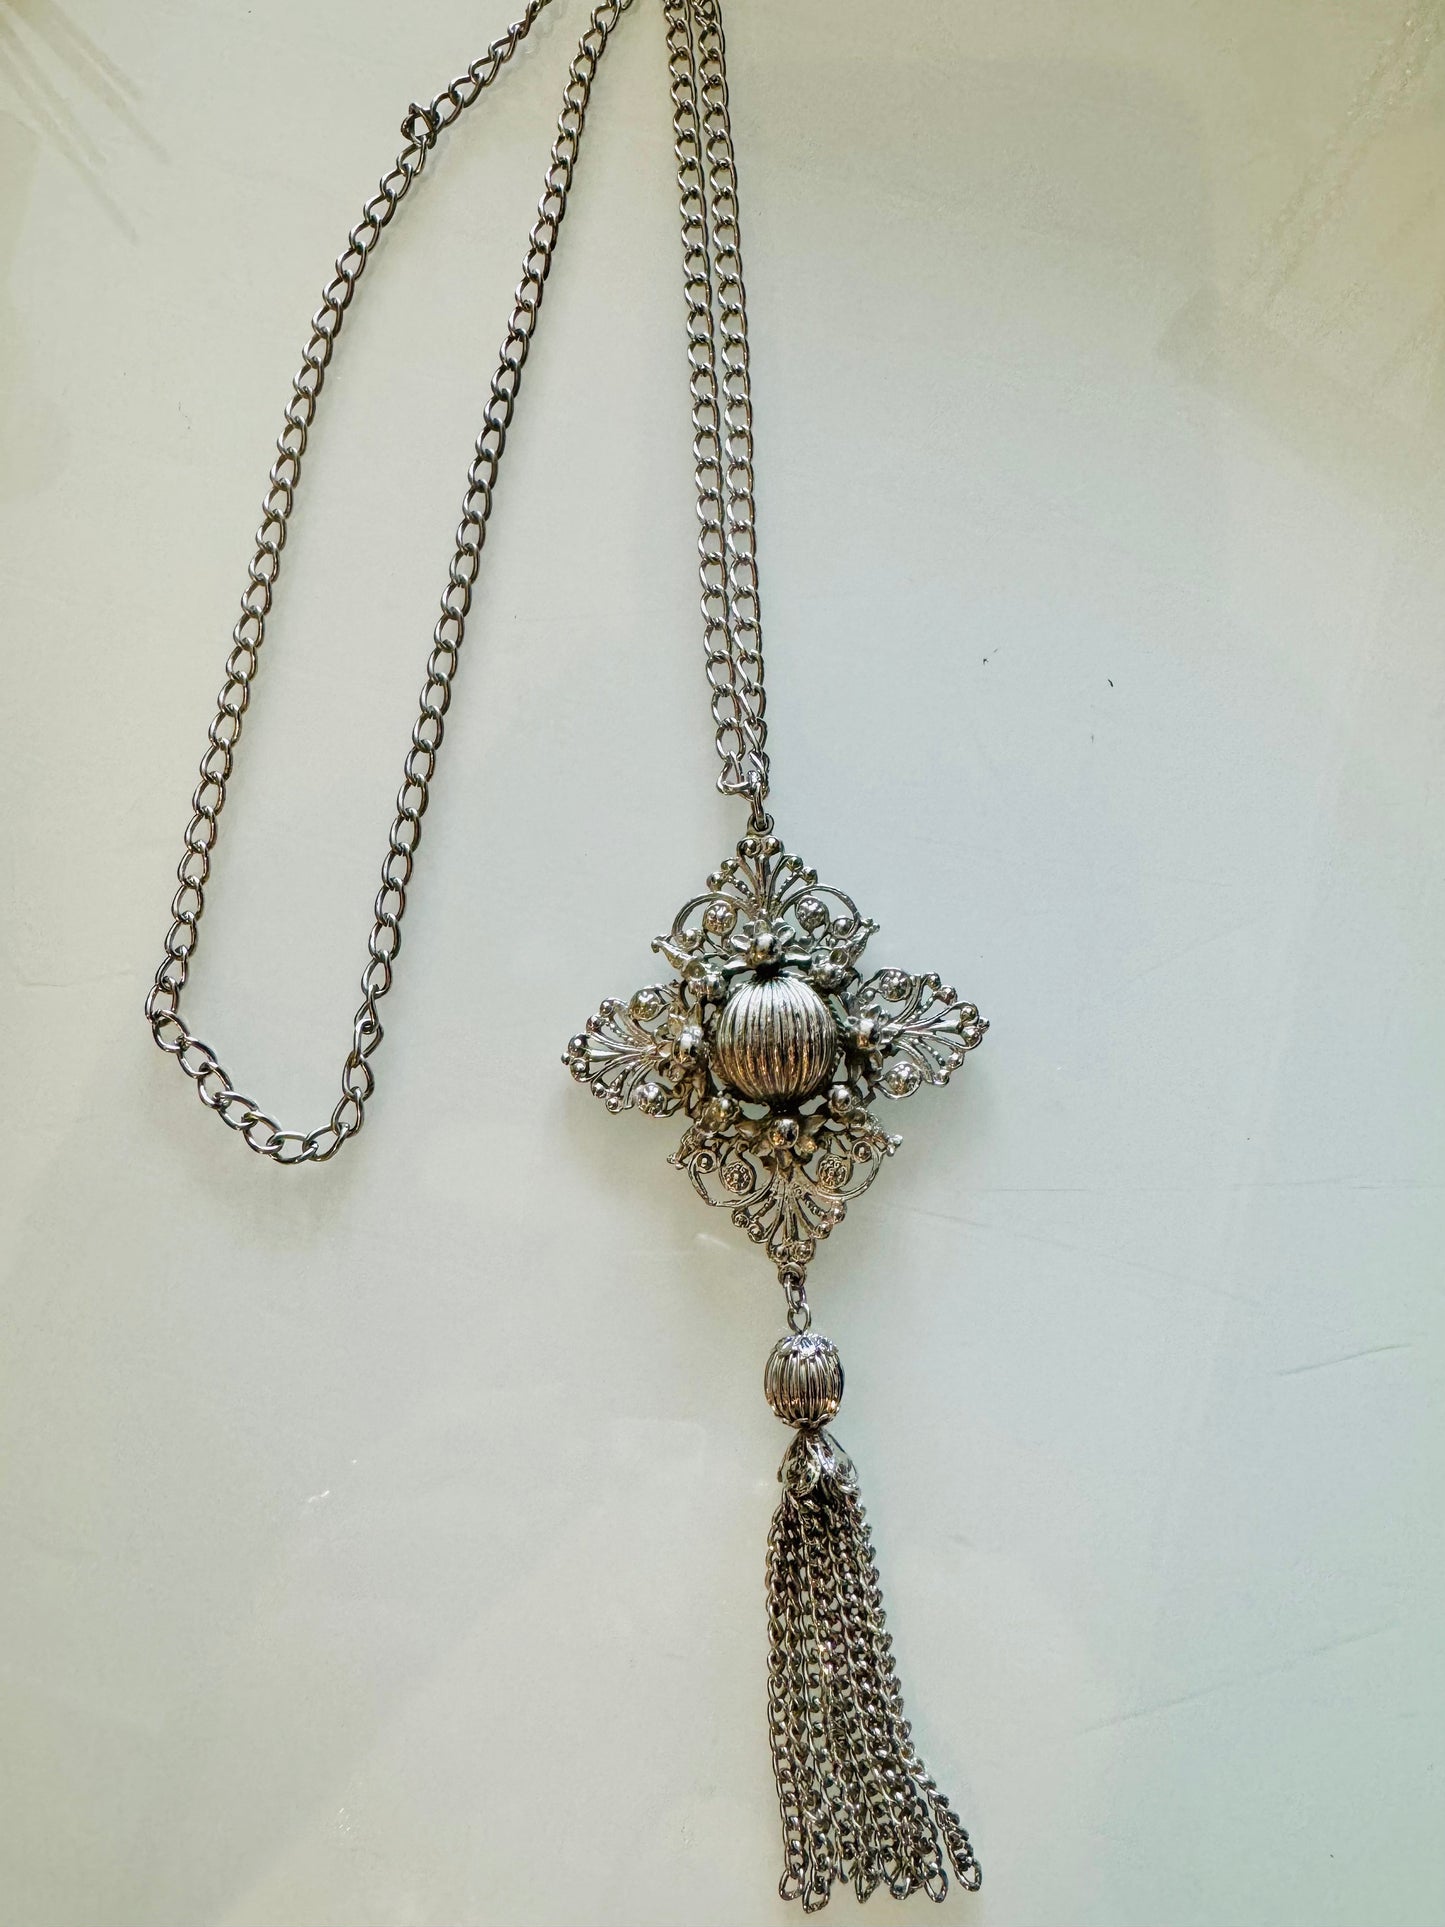 Silver tone pendant with tassel